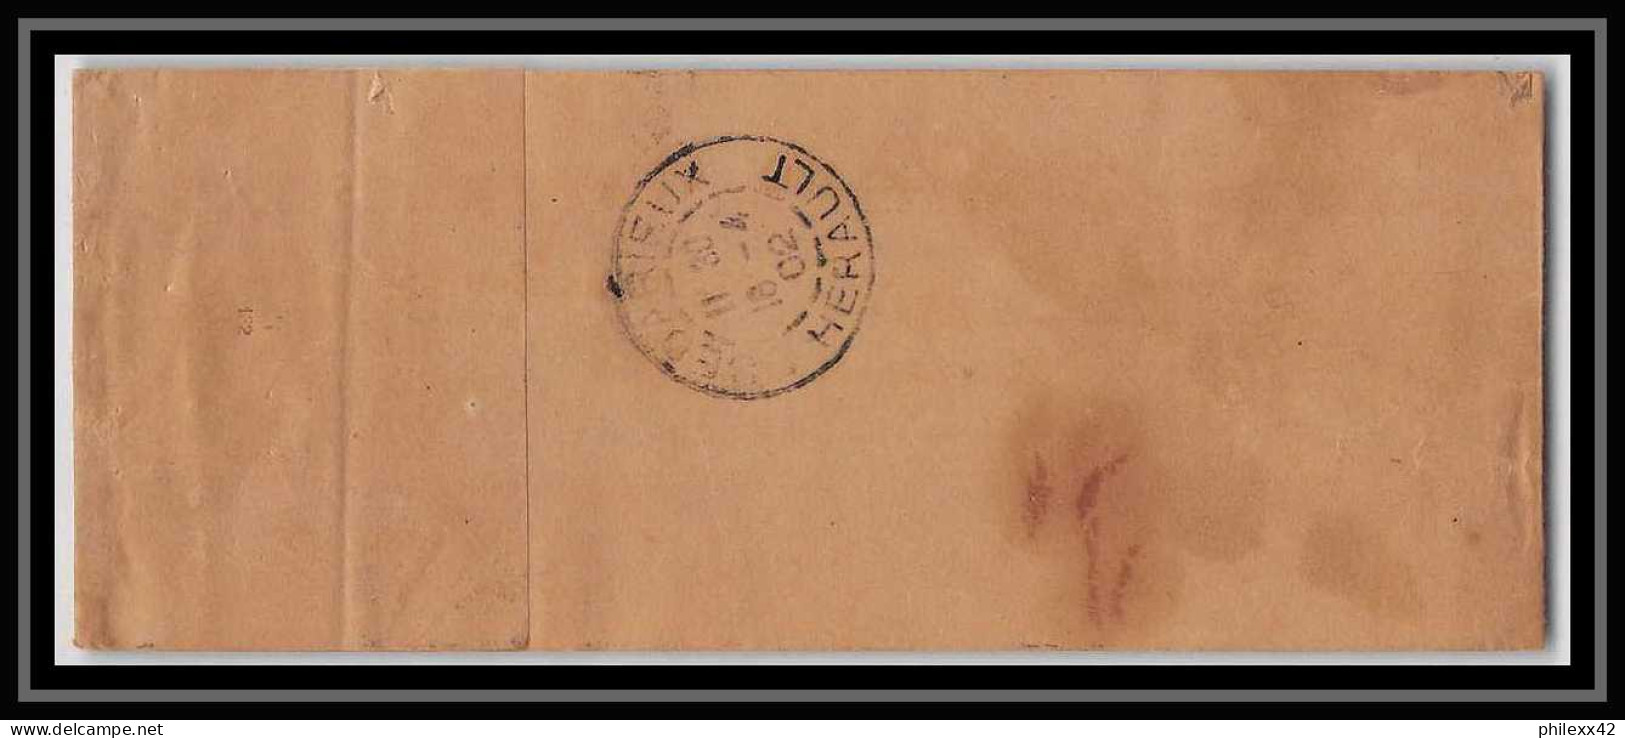 4736 2c Blanc + Complement Sage Affranchissement Bedarieux Herault 1902 Bande Journal France Entier Postal Stationery - Bandes Pour Journaux